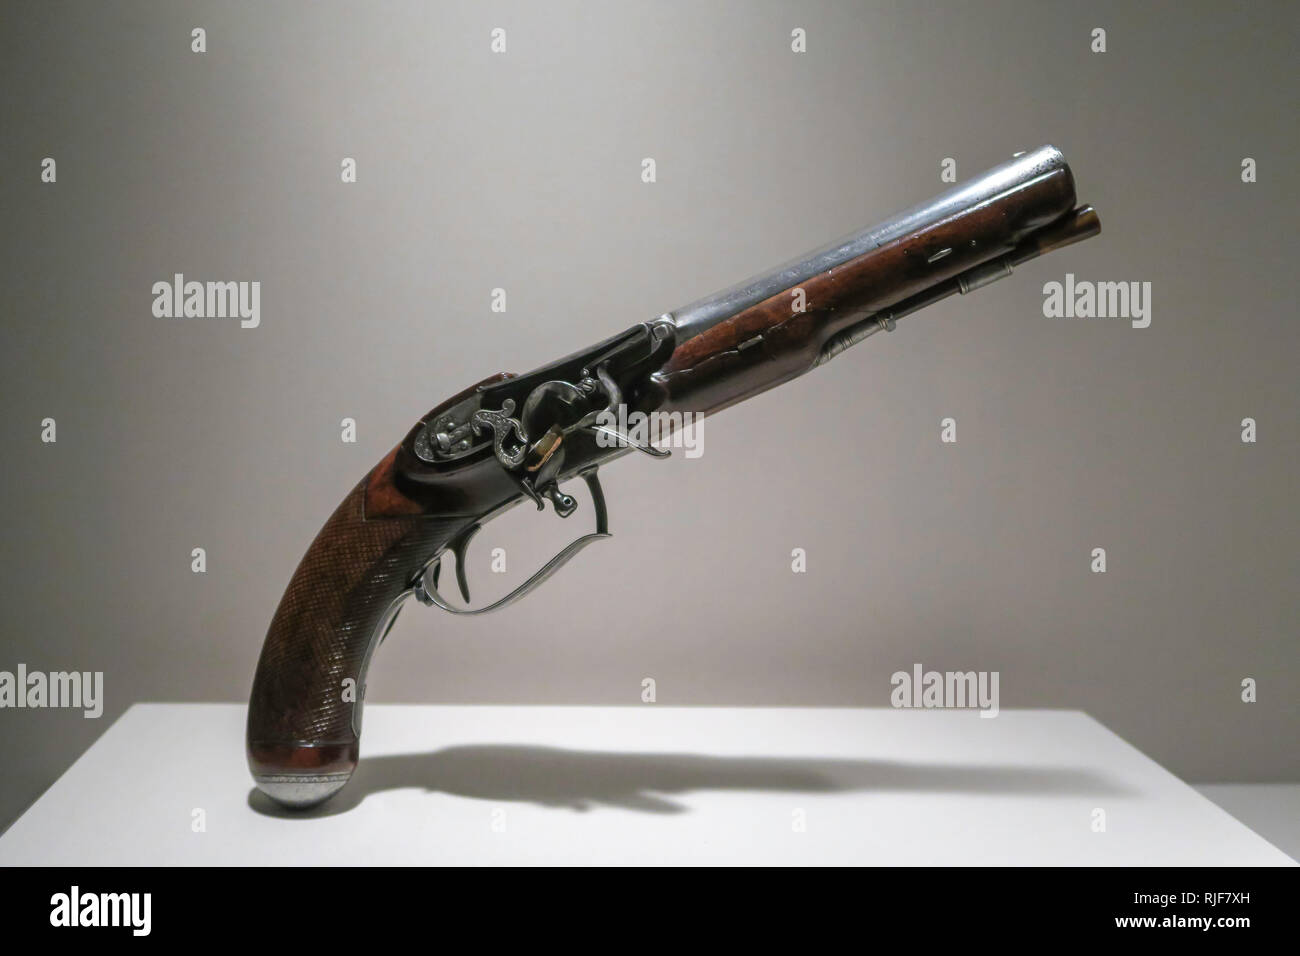 "L'arte di Londra armi da fuoco" mostra al Metropolitan Museum of Art di New York, Stati Uniti d'America Foto Stock